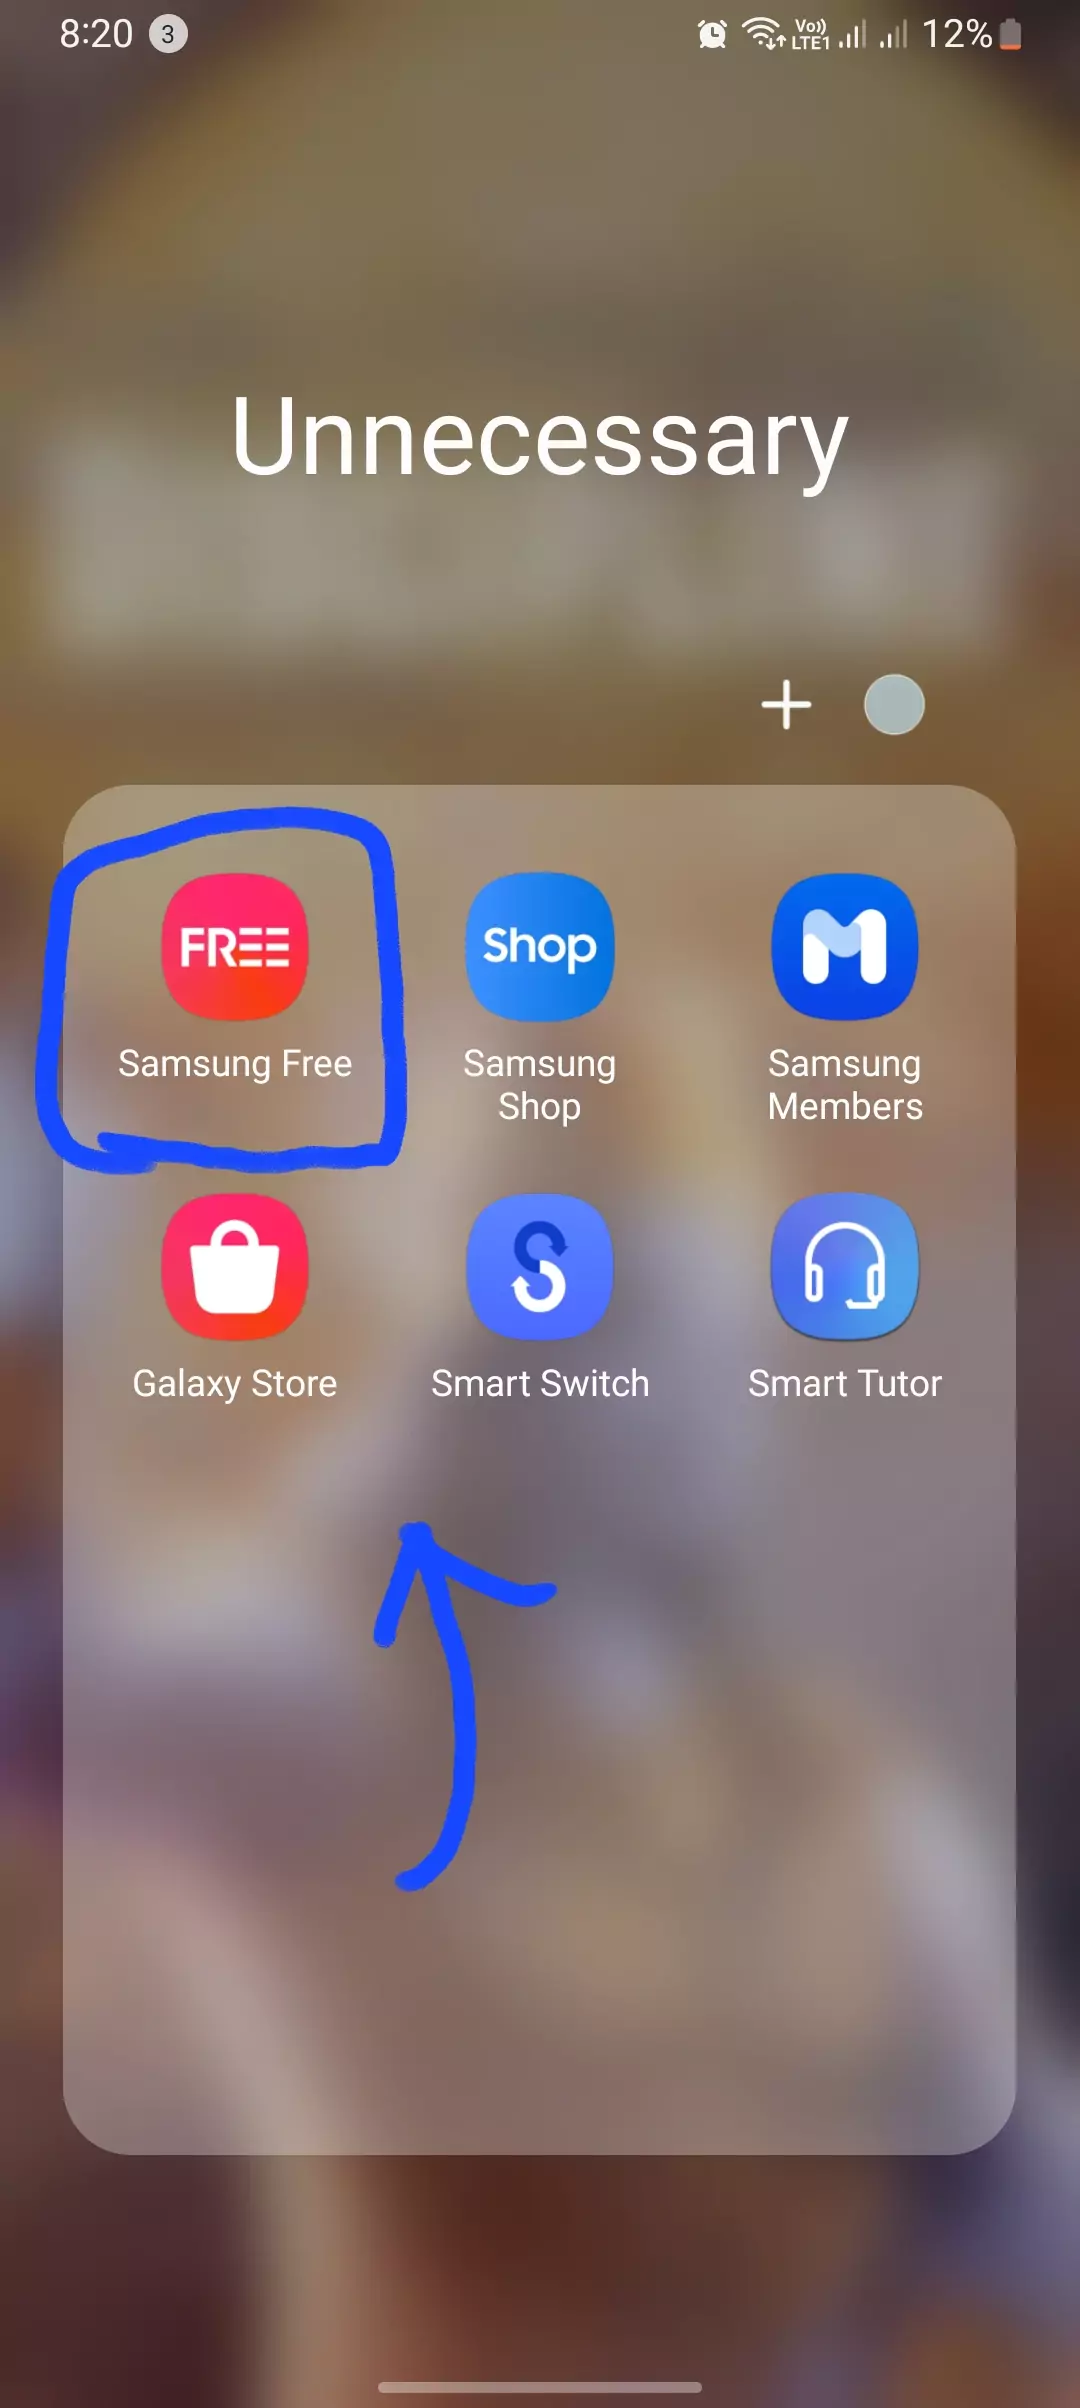 samsung free app highlighted